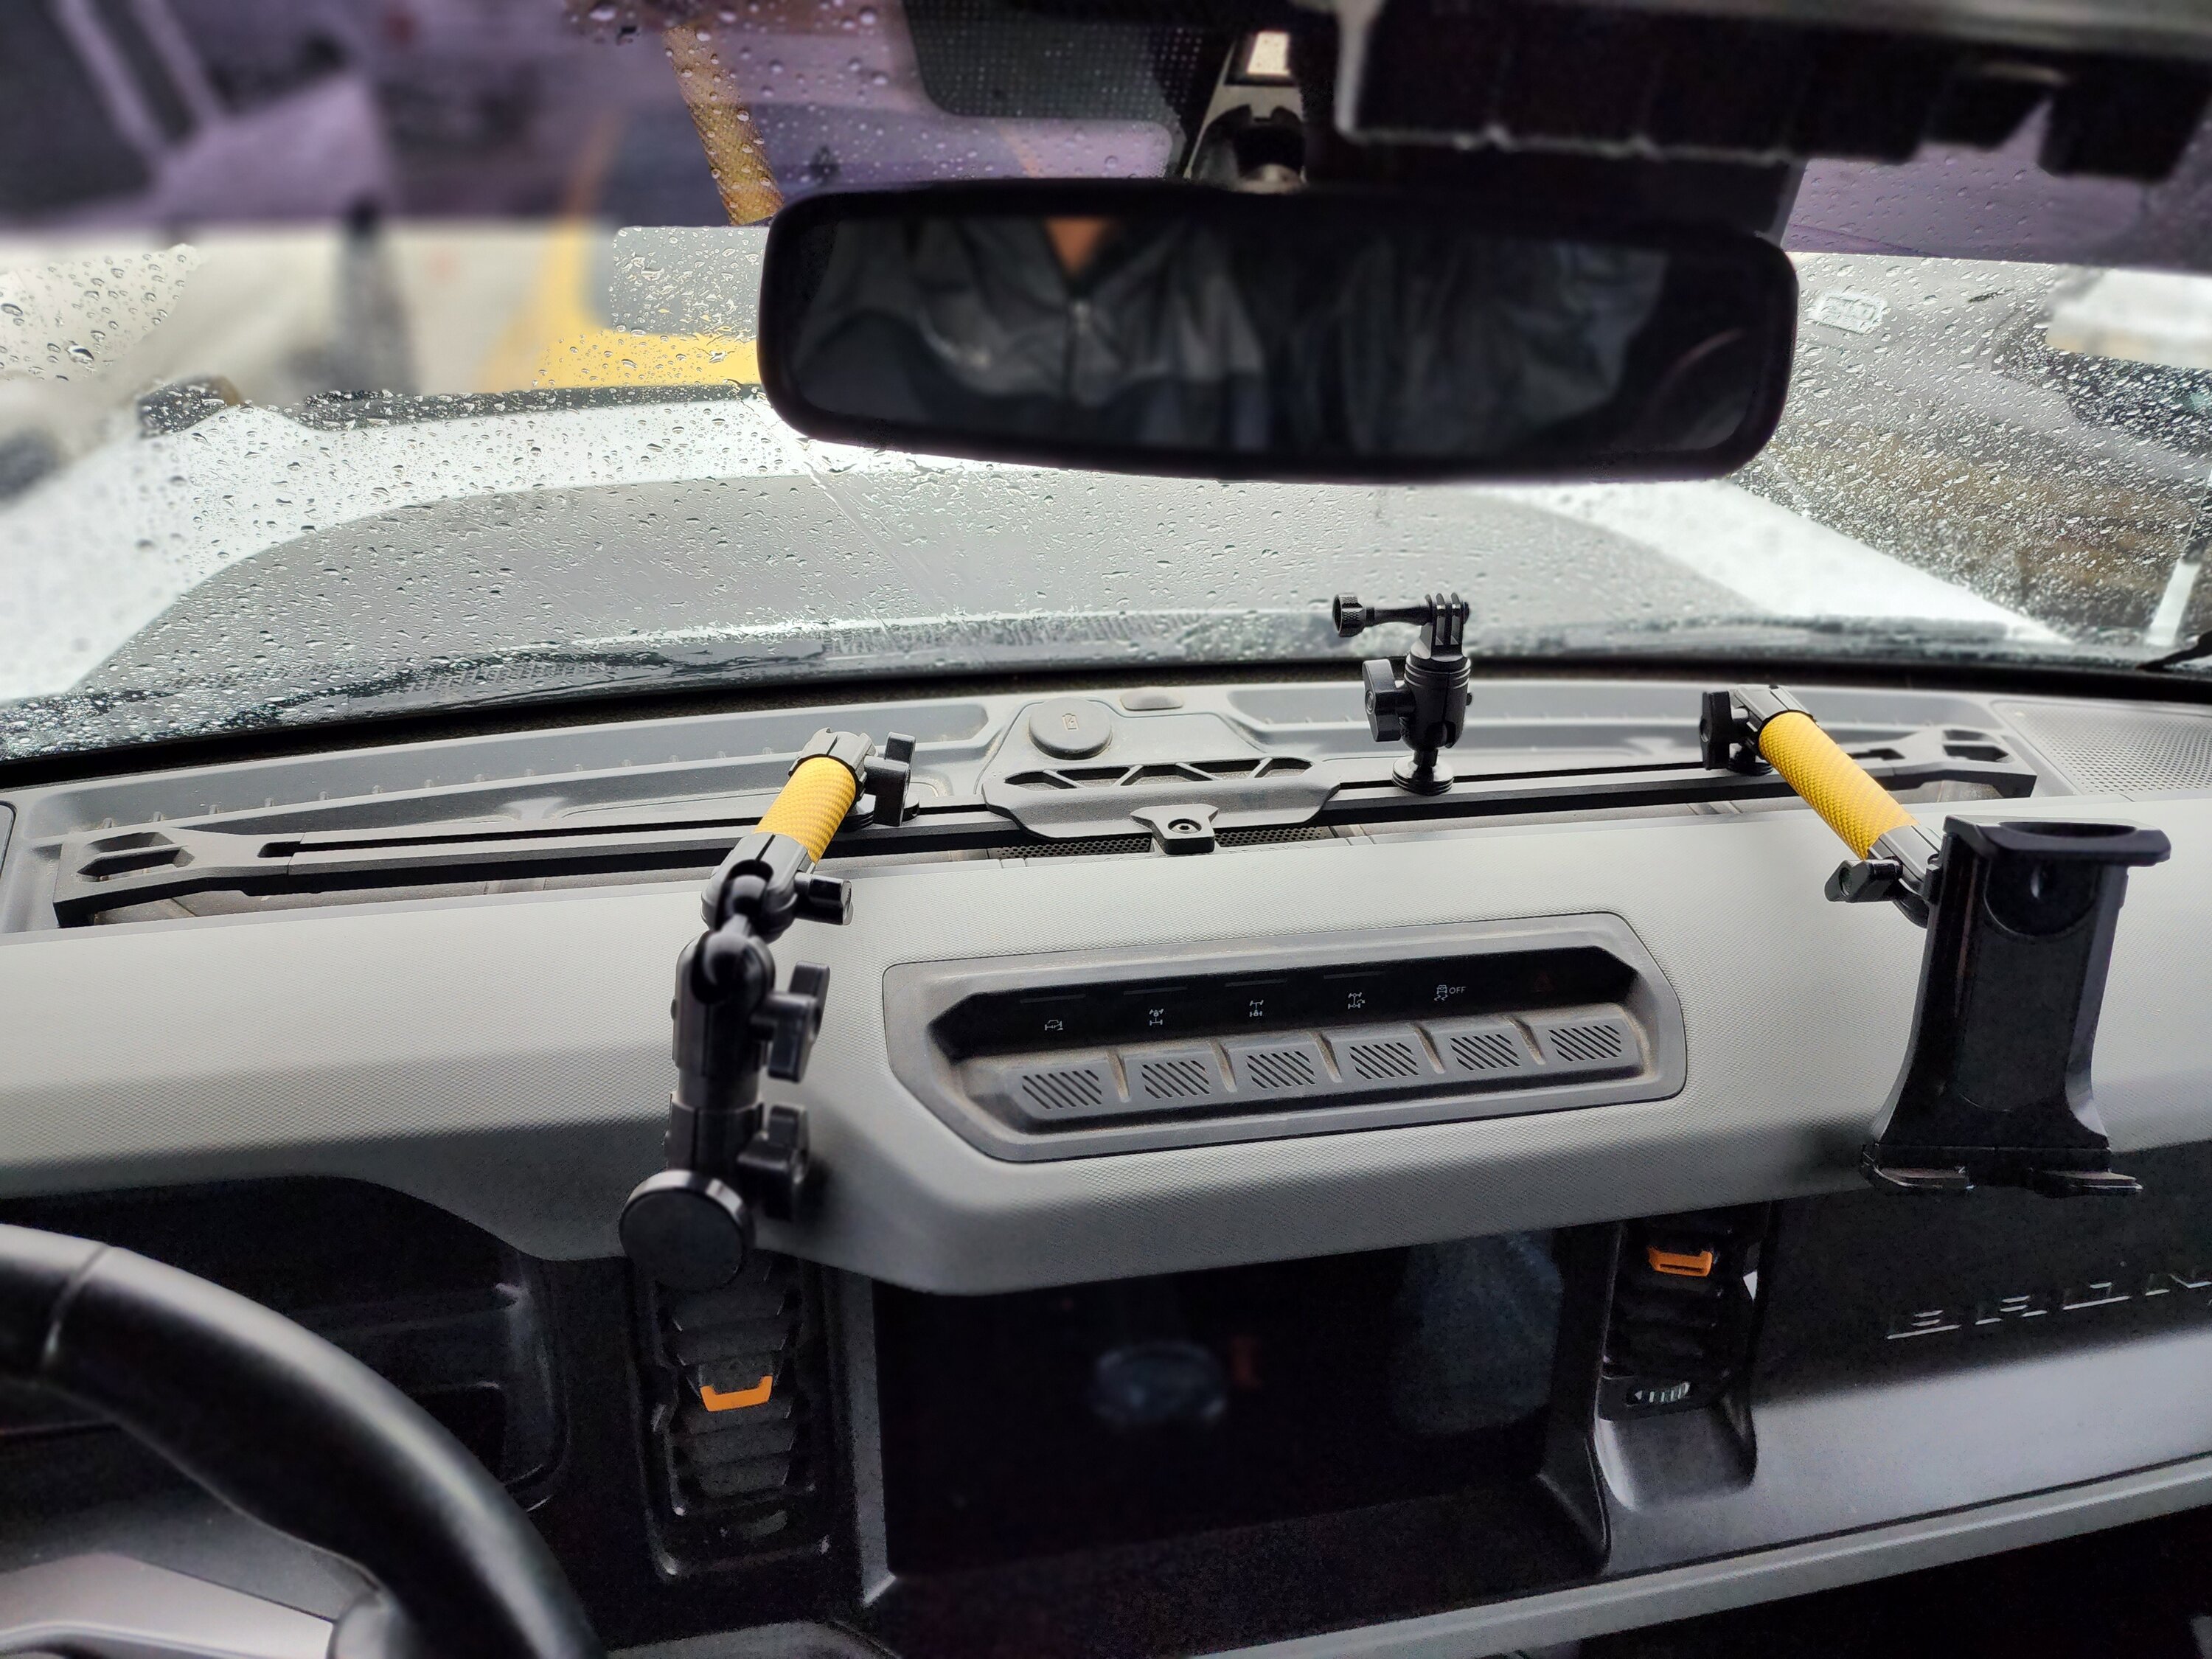 Ford Bronco Bulletpoint mount on Mabett accessory rack 20230124_092011